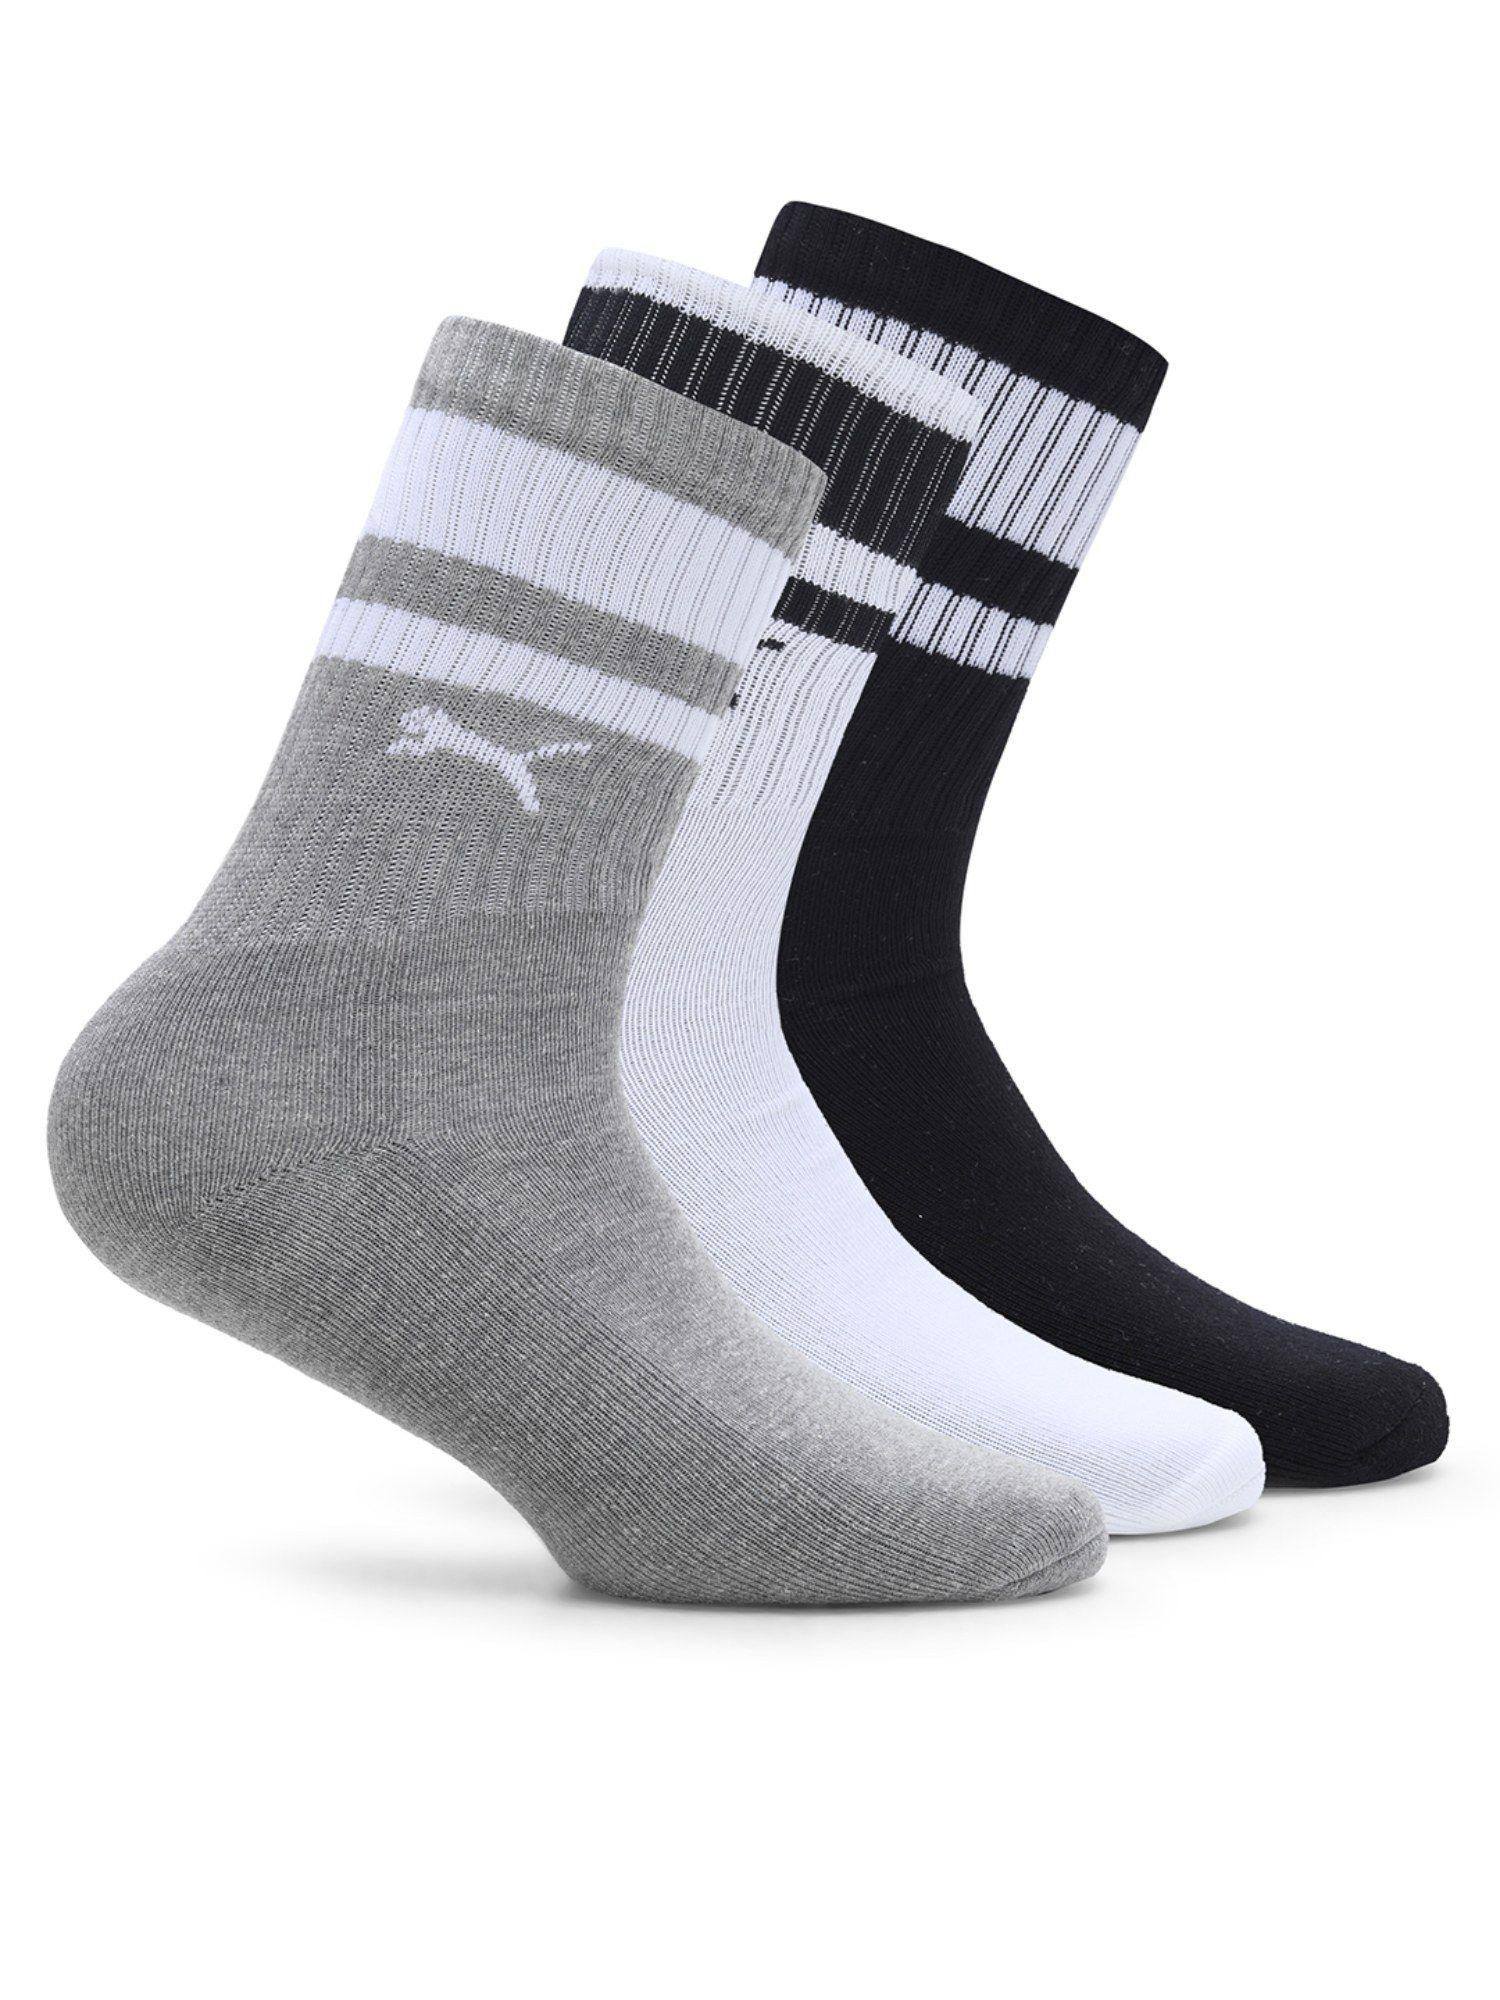 heritage-unisex-multicolored-crew-socks-(pack-of-3)